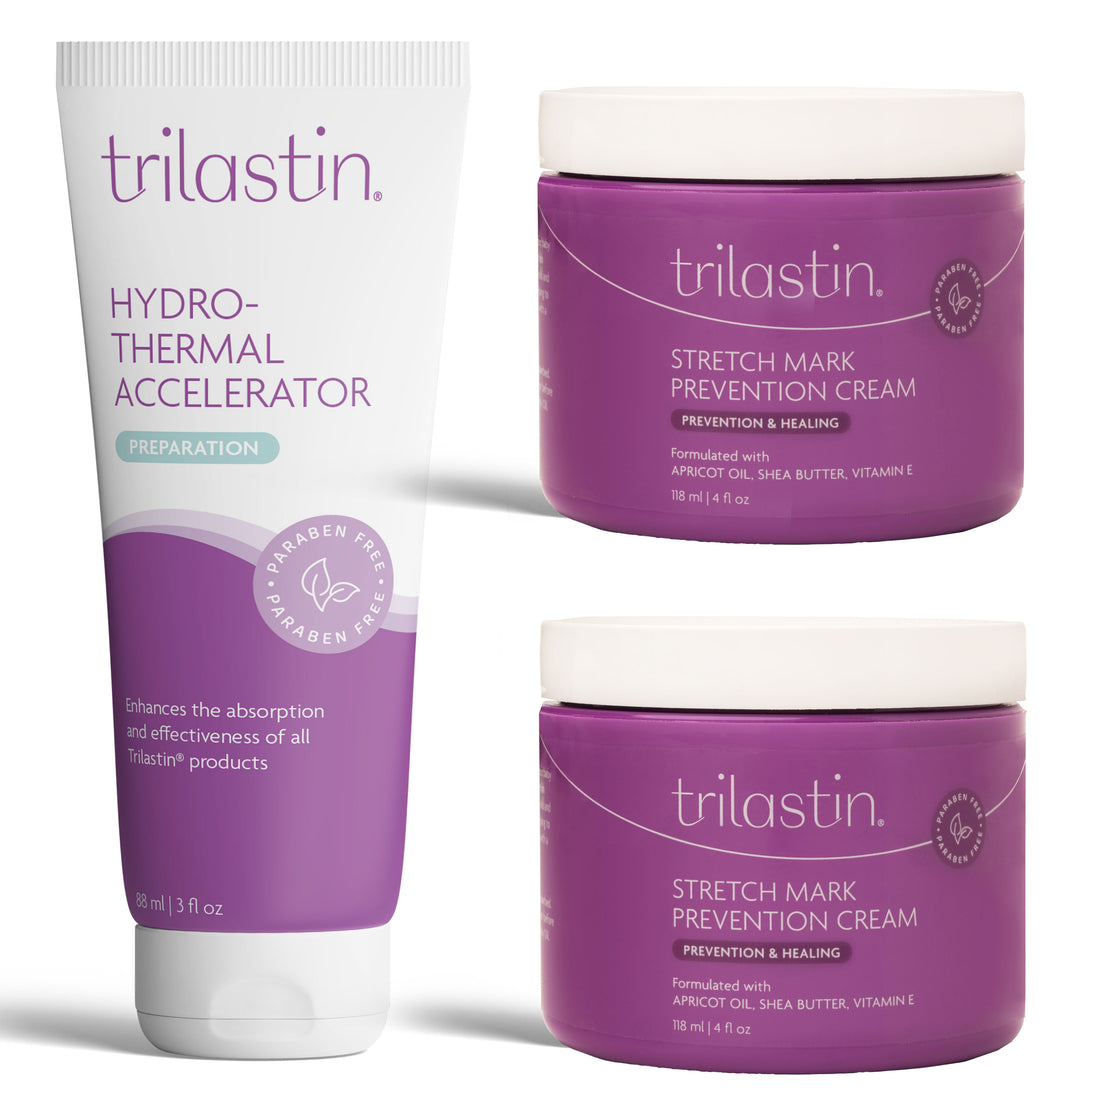 TriLASTIN Stretch Mark Prevention Hydration Duo - 2 month supply - TriLASTIN